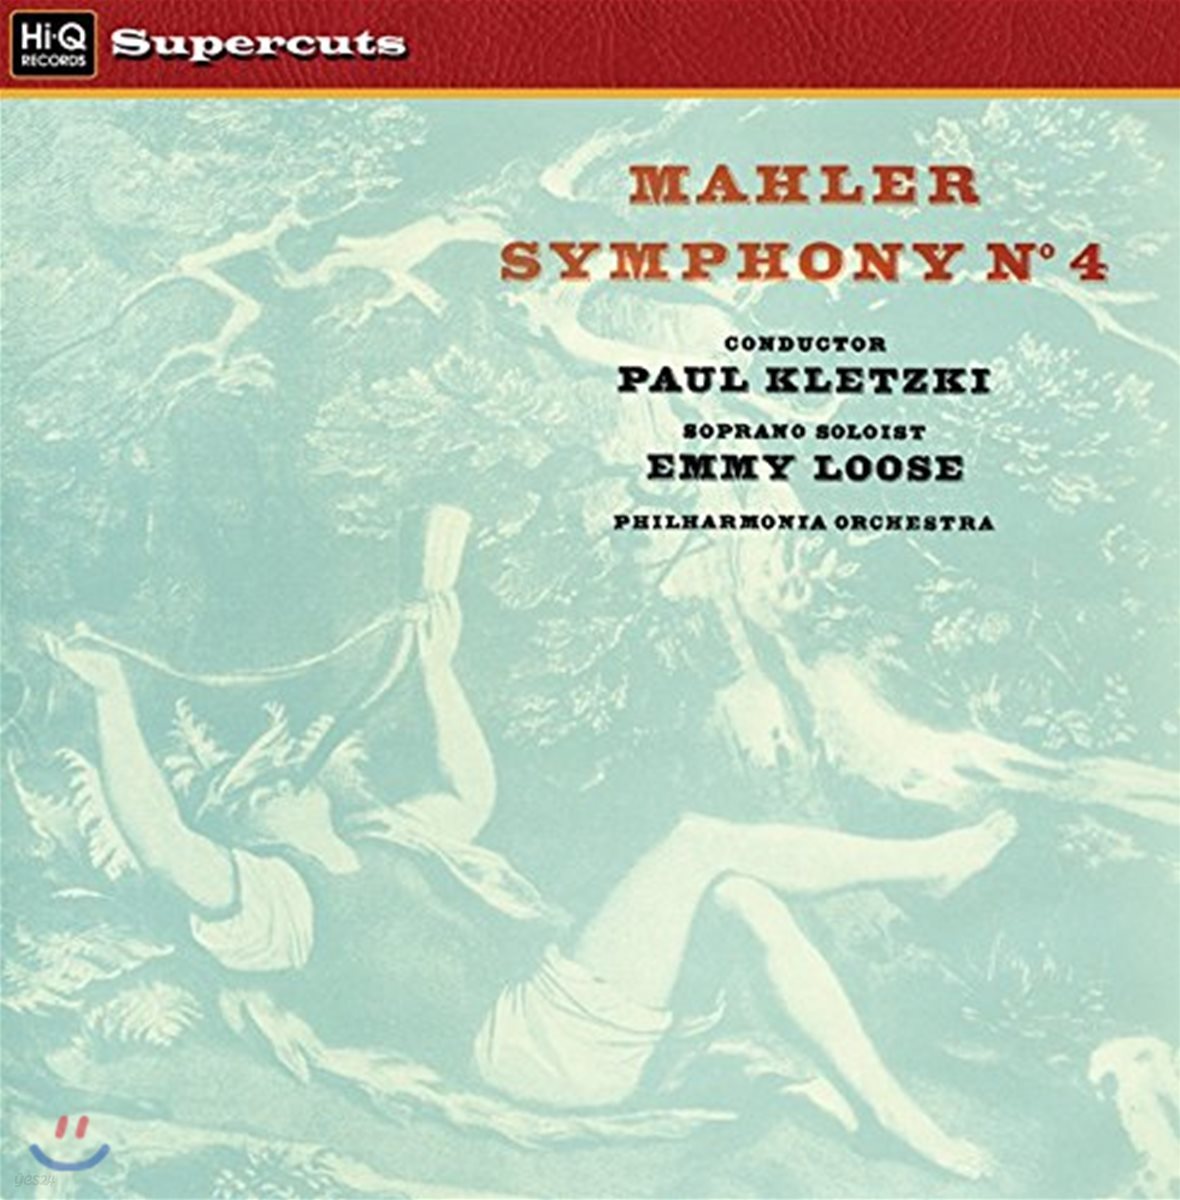 Paul Kletzki 말러: 교향곡 4번 - 필하모니아 오케스트라, 파울 클레츠키 (Mahler: Symphony No.4) [LP]